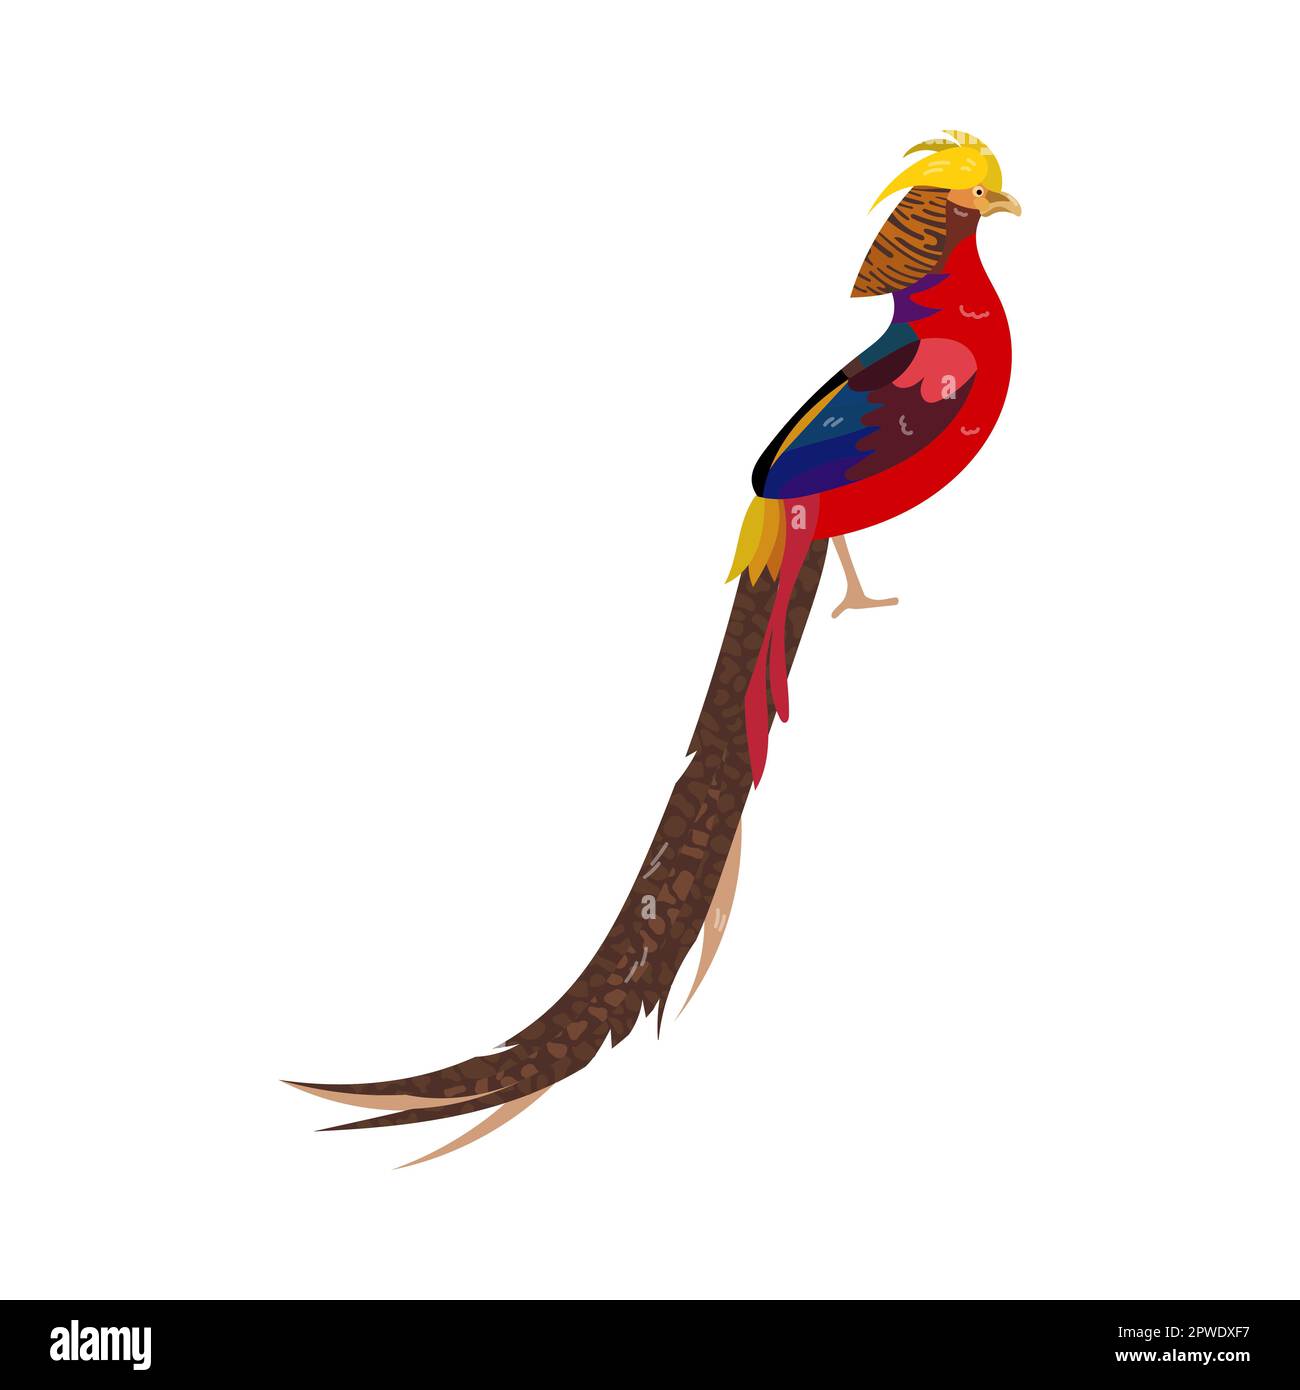 1,335 Pheasant Cartoon Images, Stock Photos, 3D objects, & Vectors